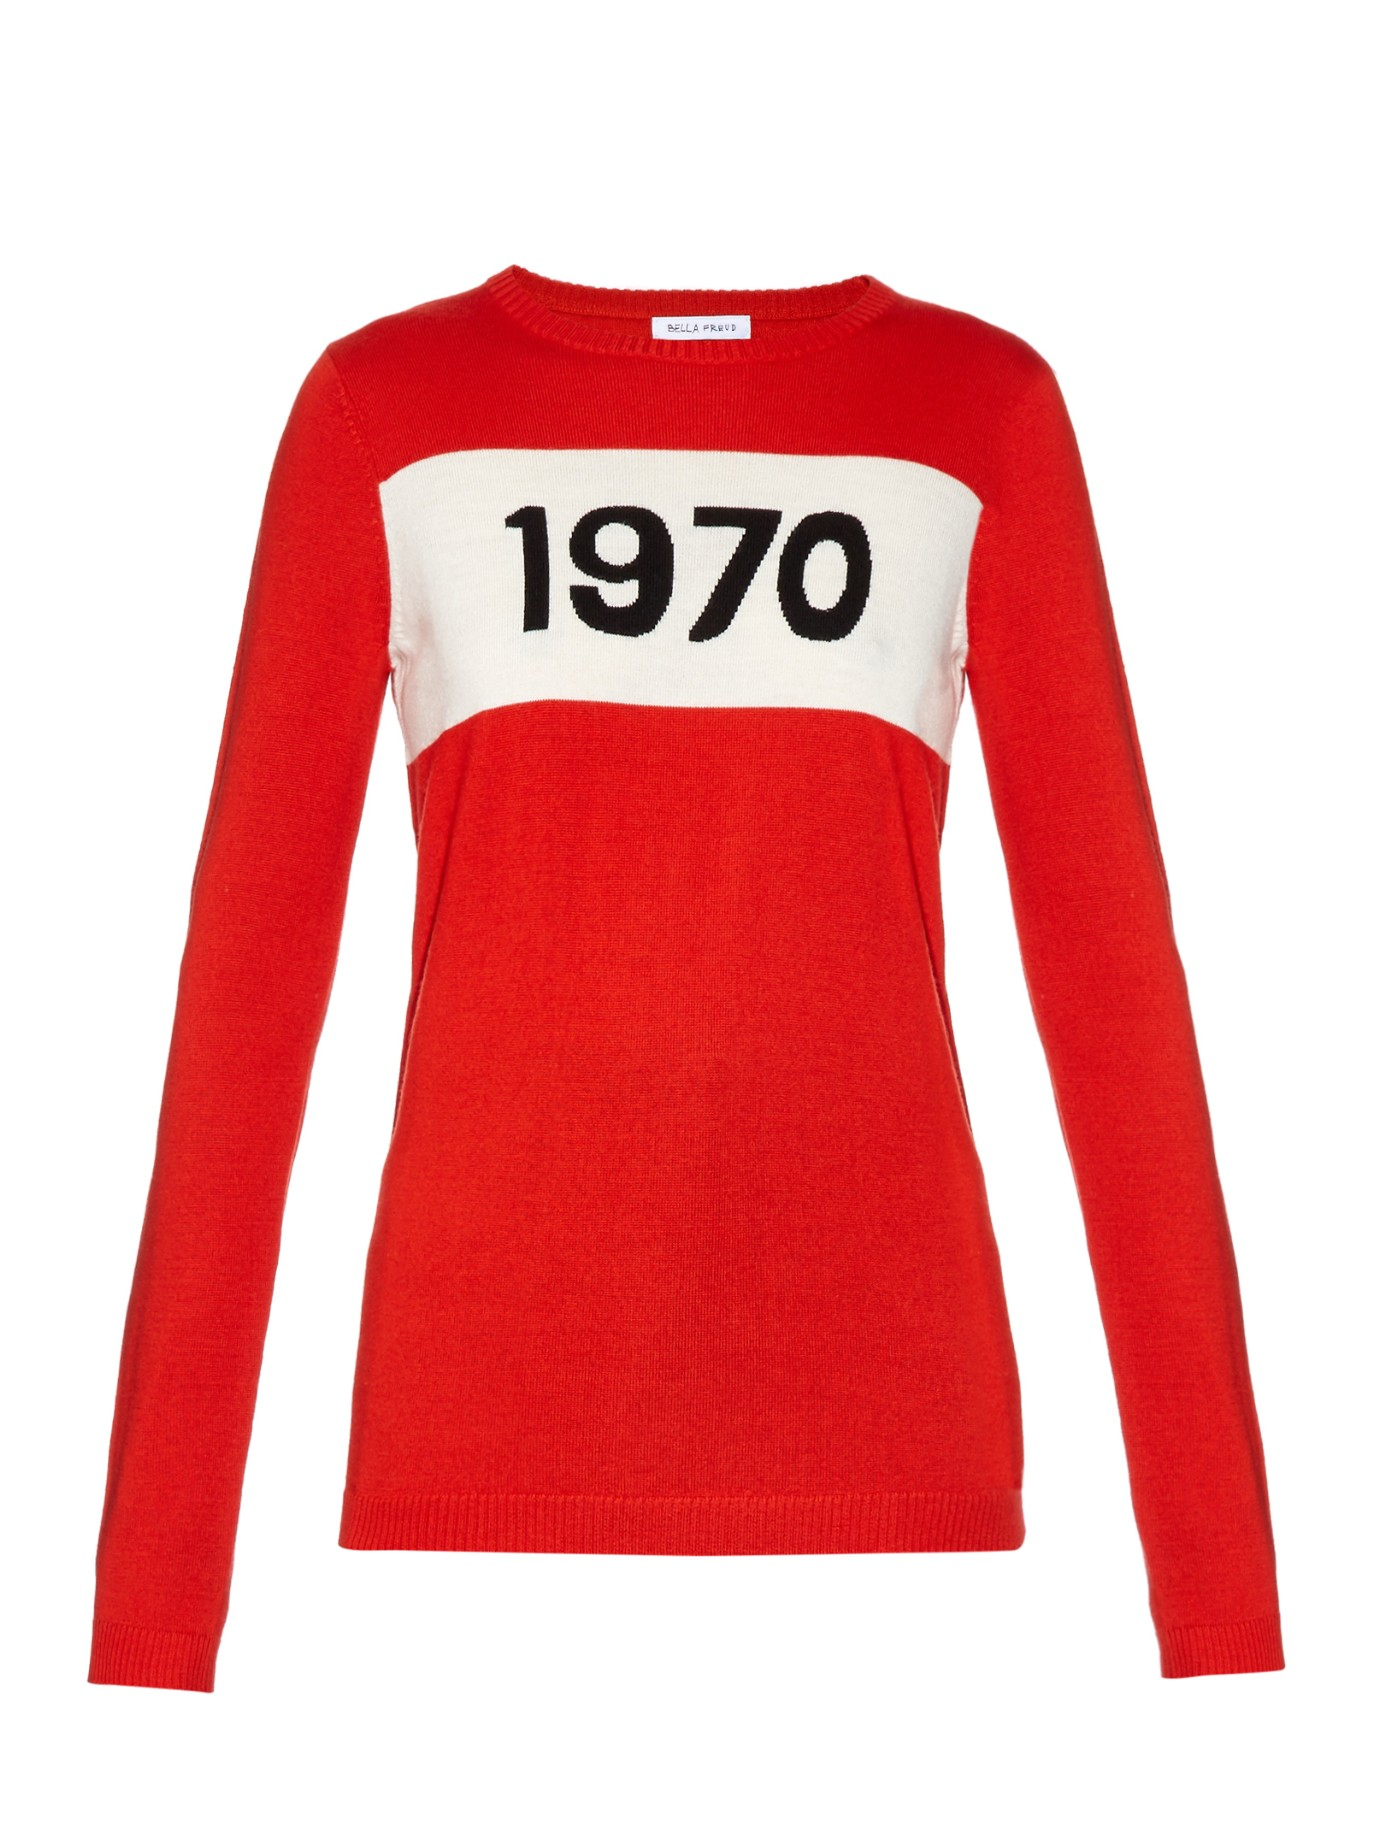 Lyst - Bella Freud 1970-intarsia Wool Sweater in Red